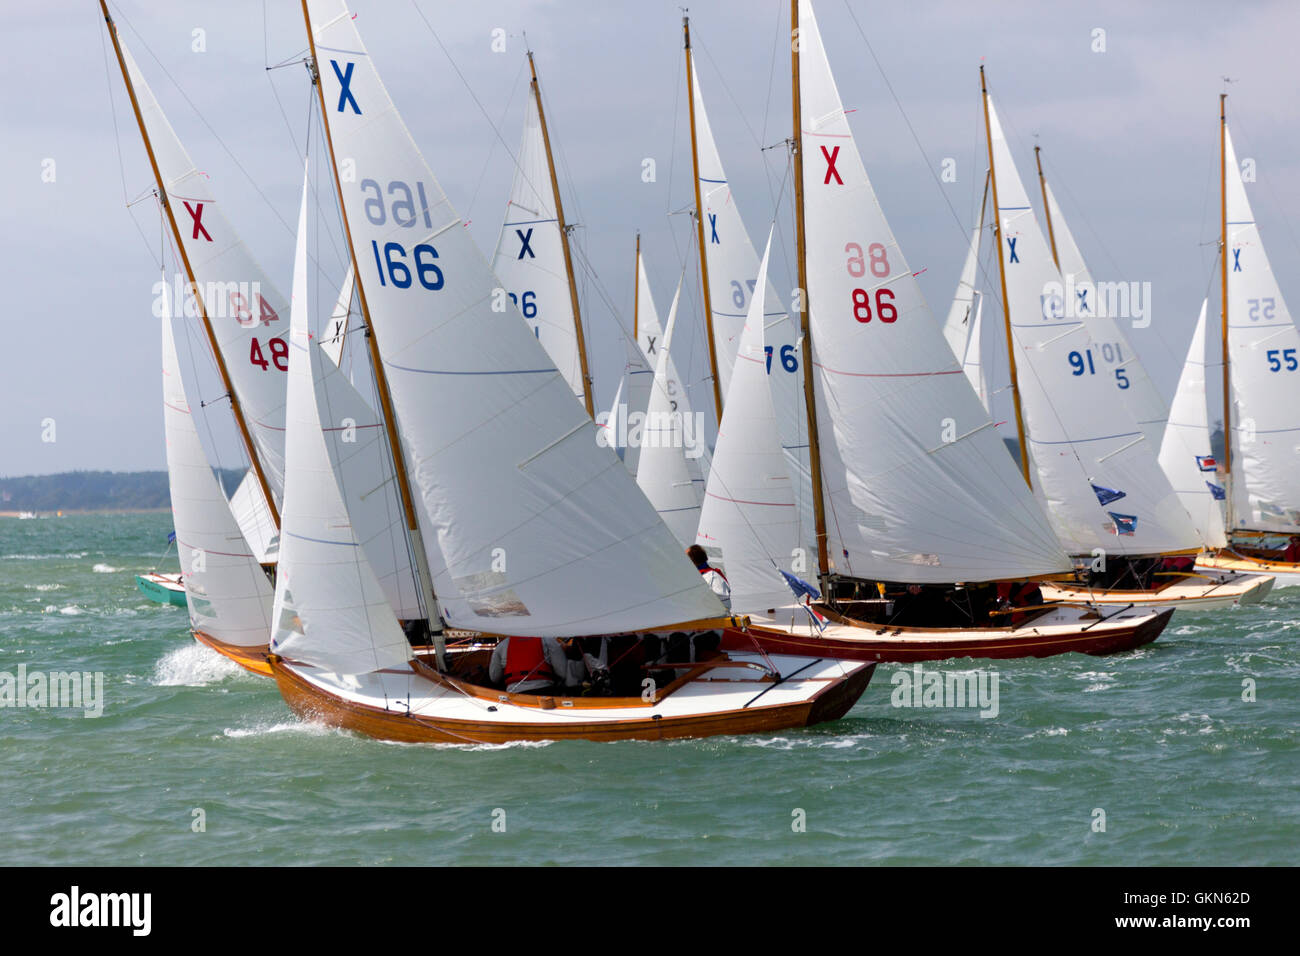 XOD X0D X Boat yacht racing Artemis spinnaker eseguire gara barca Cowes Week Isle of Wight UK bouy navigation mark NYK Line bianco e nero vele grafico fotografo silhouette di numeri in spiaggia Foto Stock